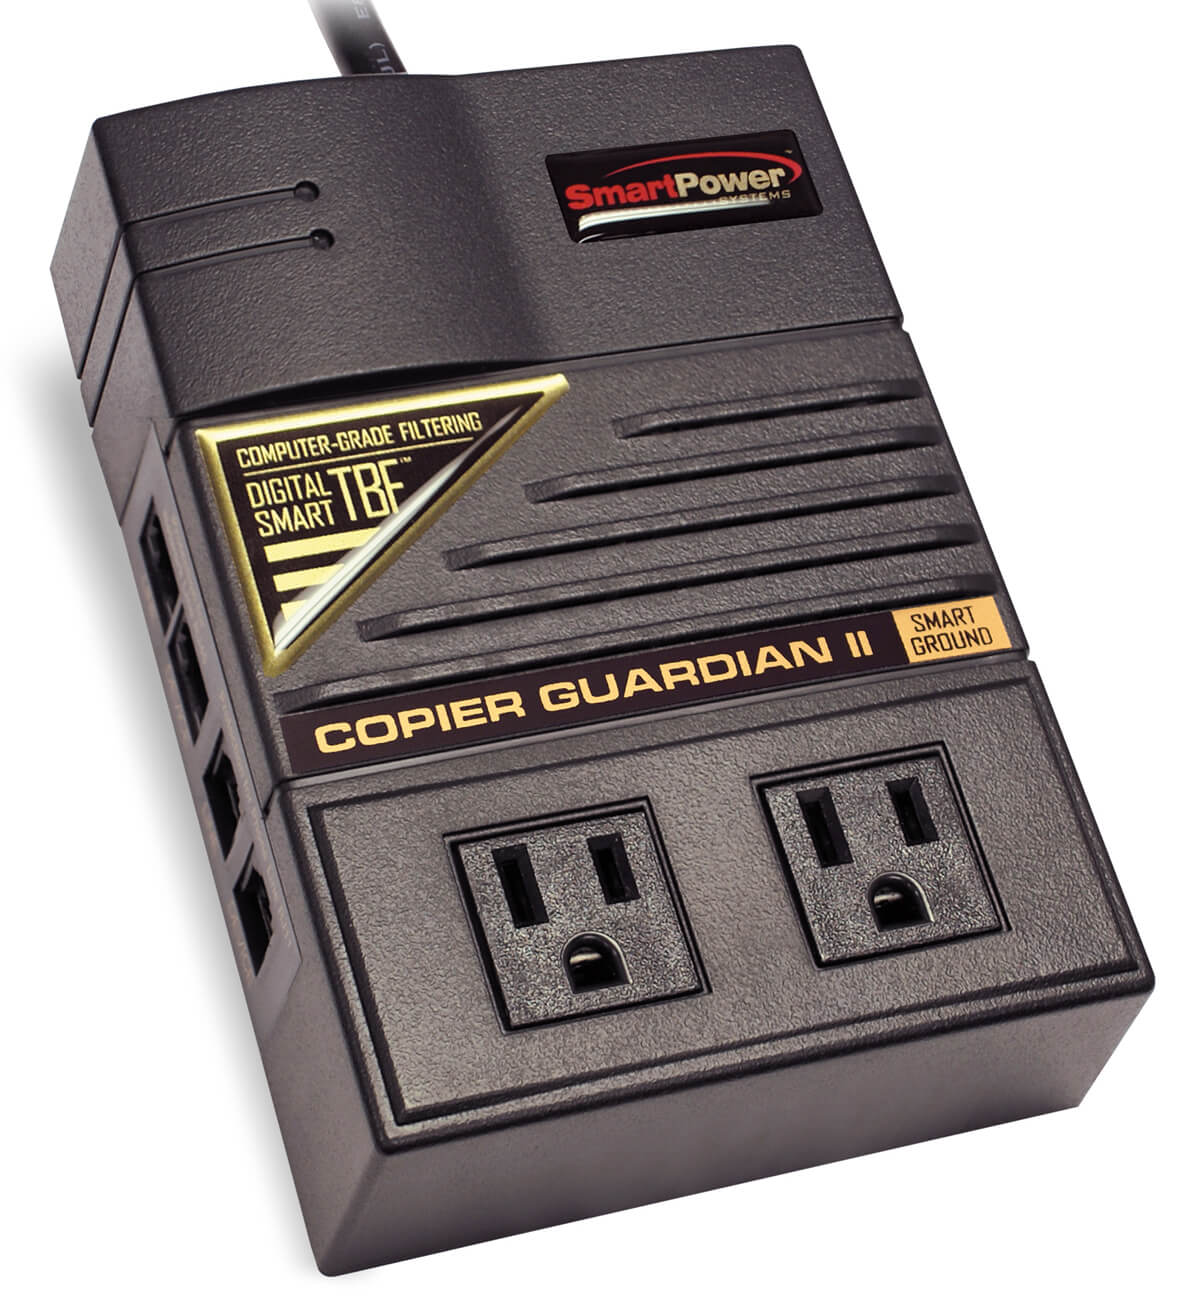 Copier Guardian II - Electronic Power Conditioner